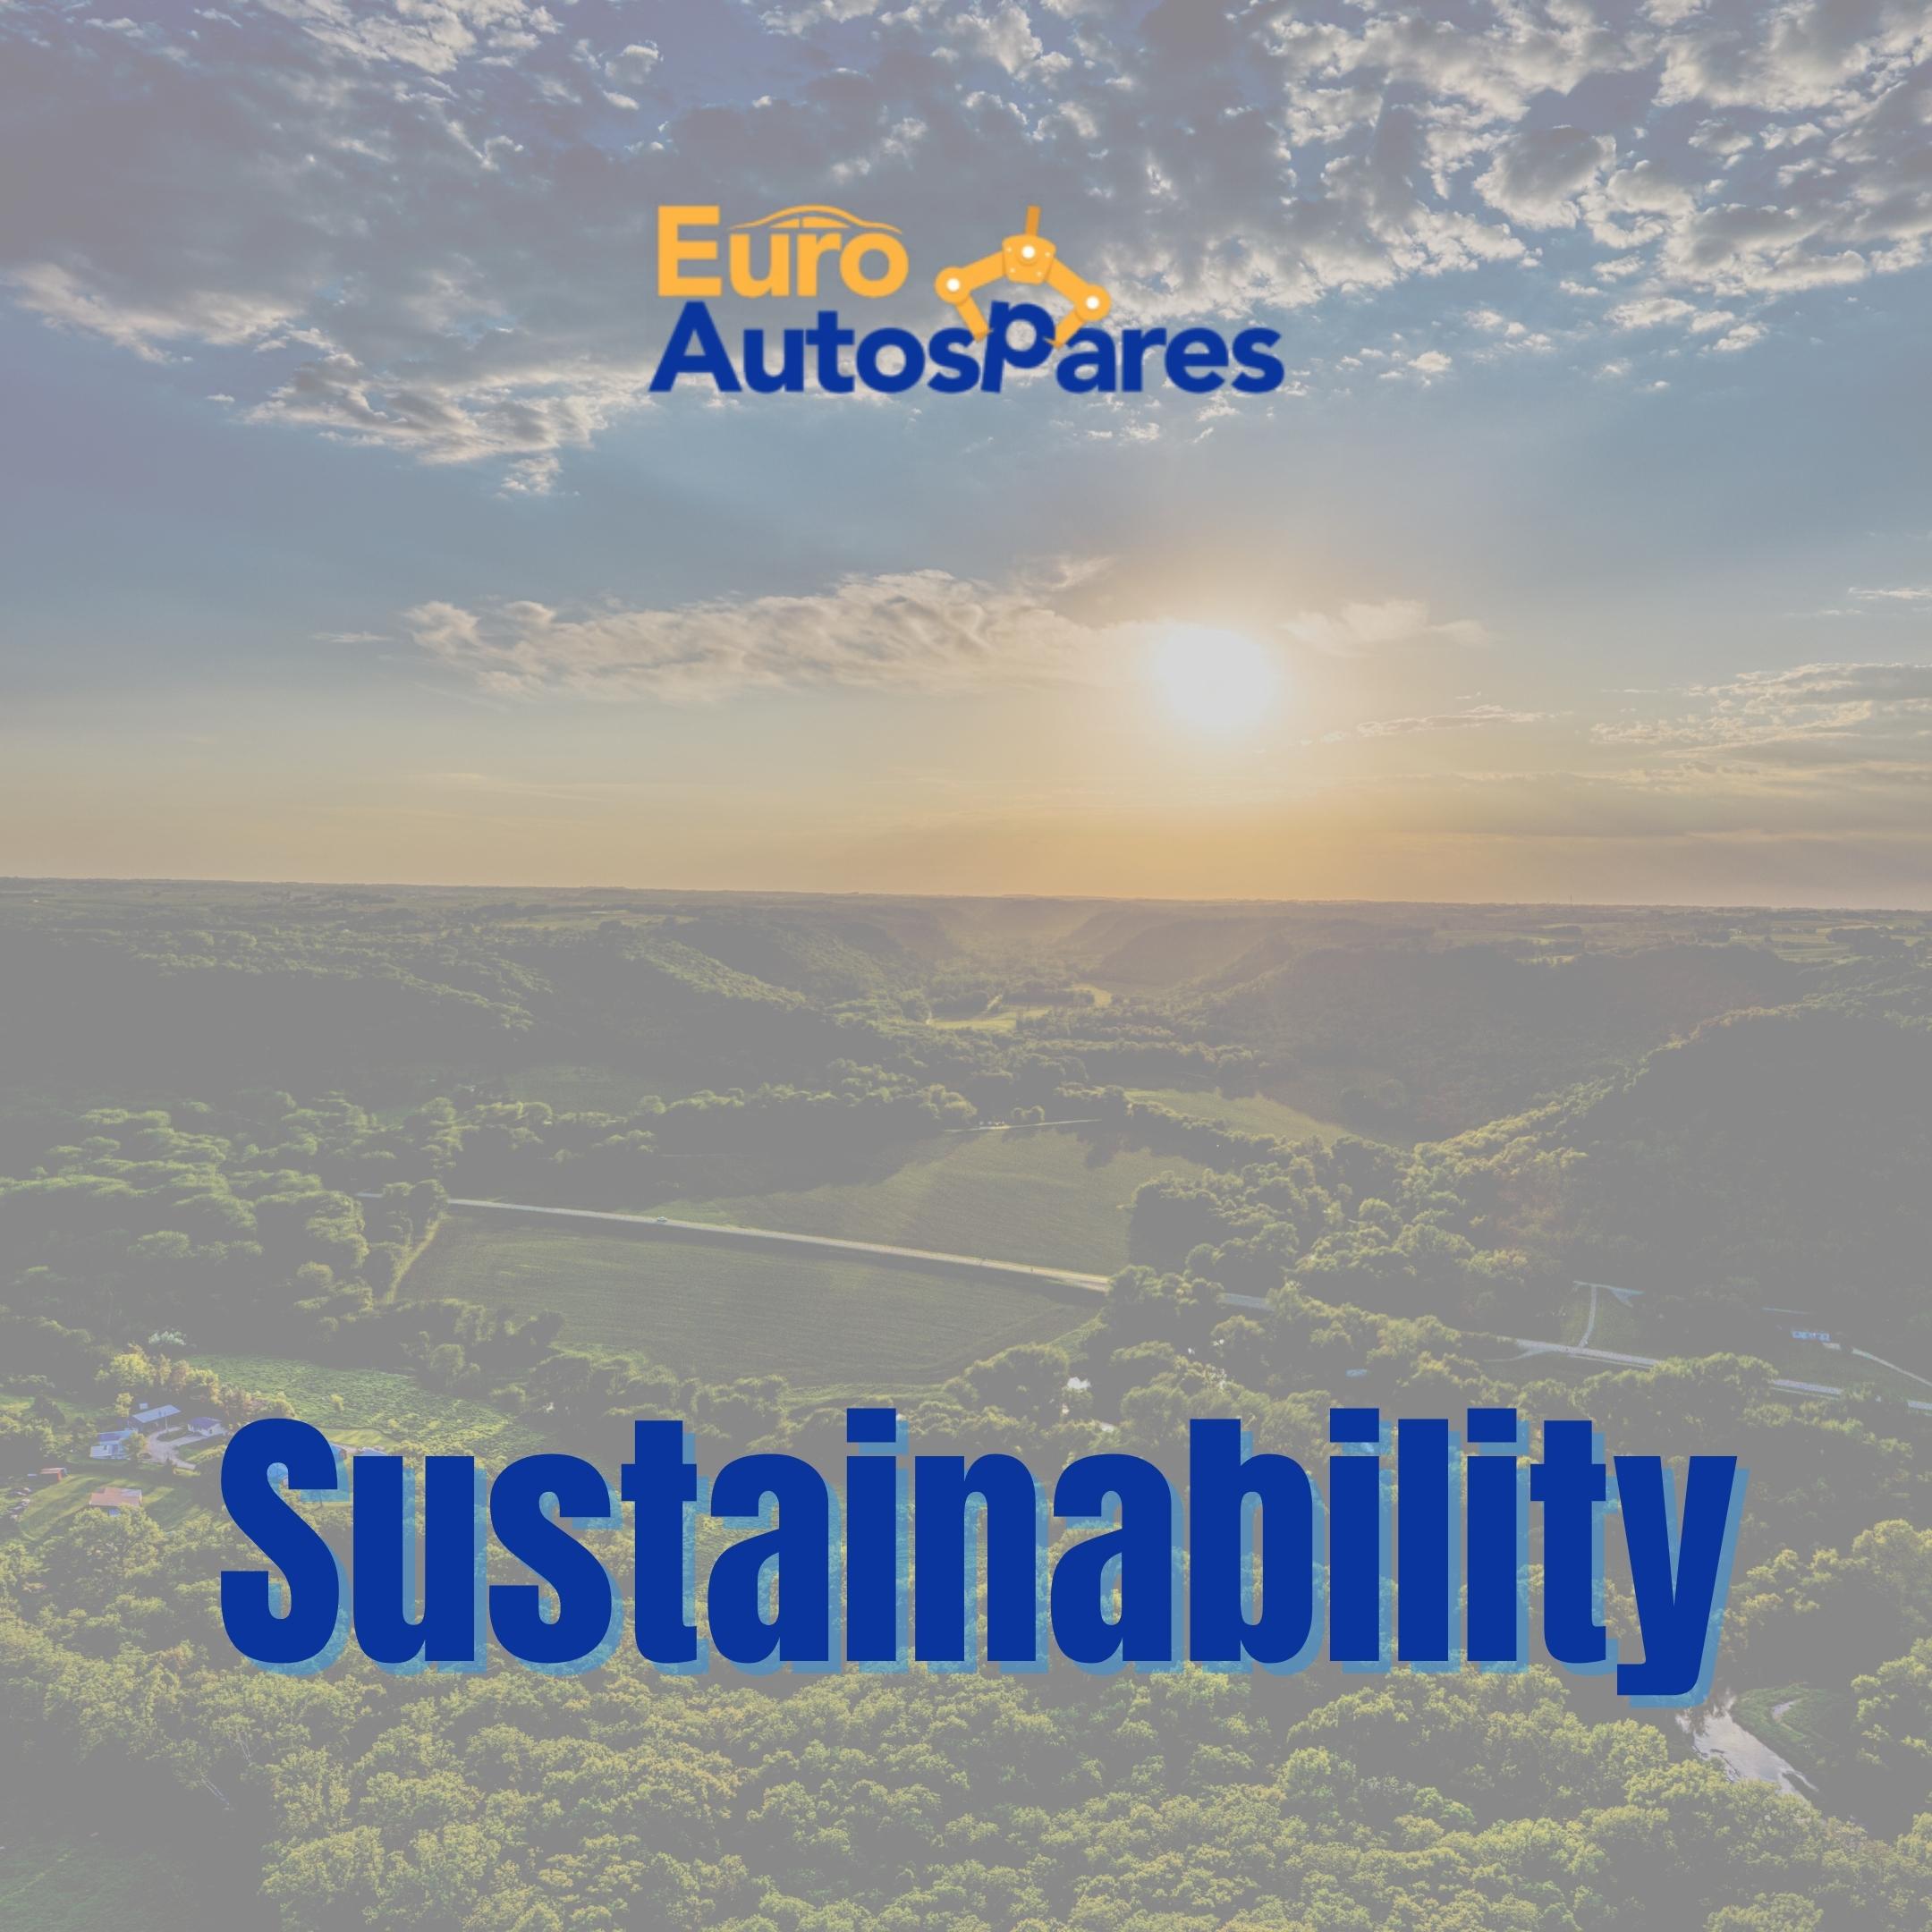 Sustainability at Euro AutoSpares